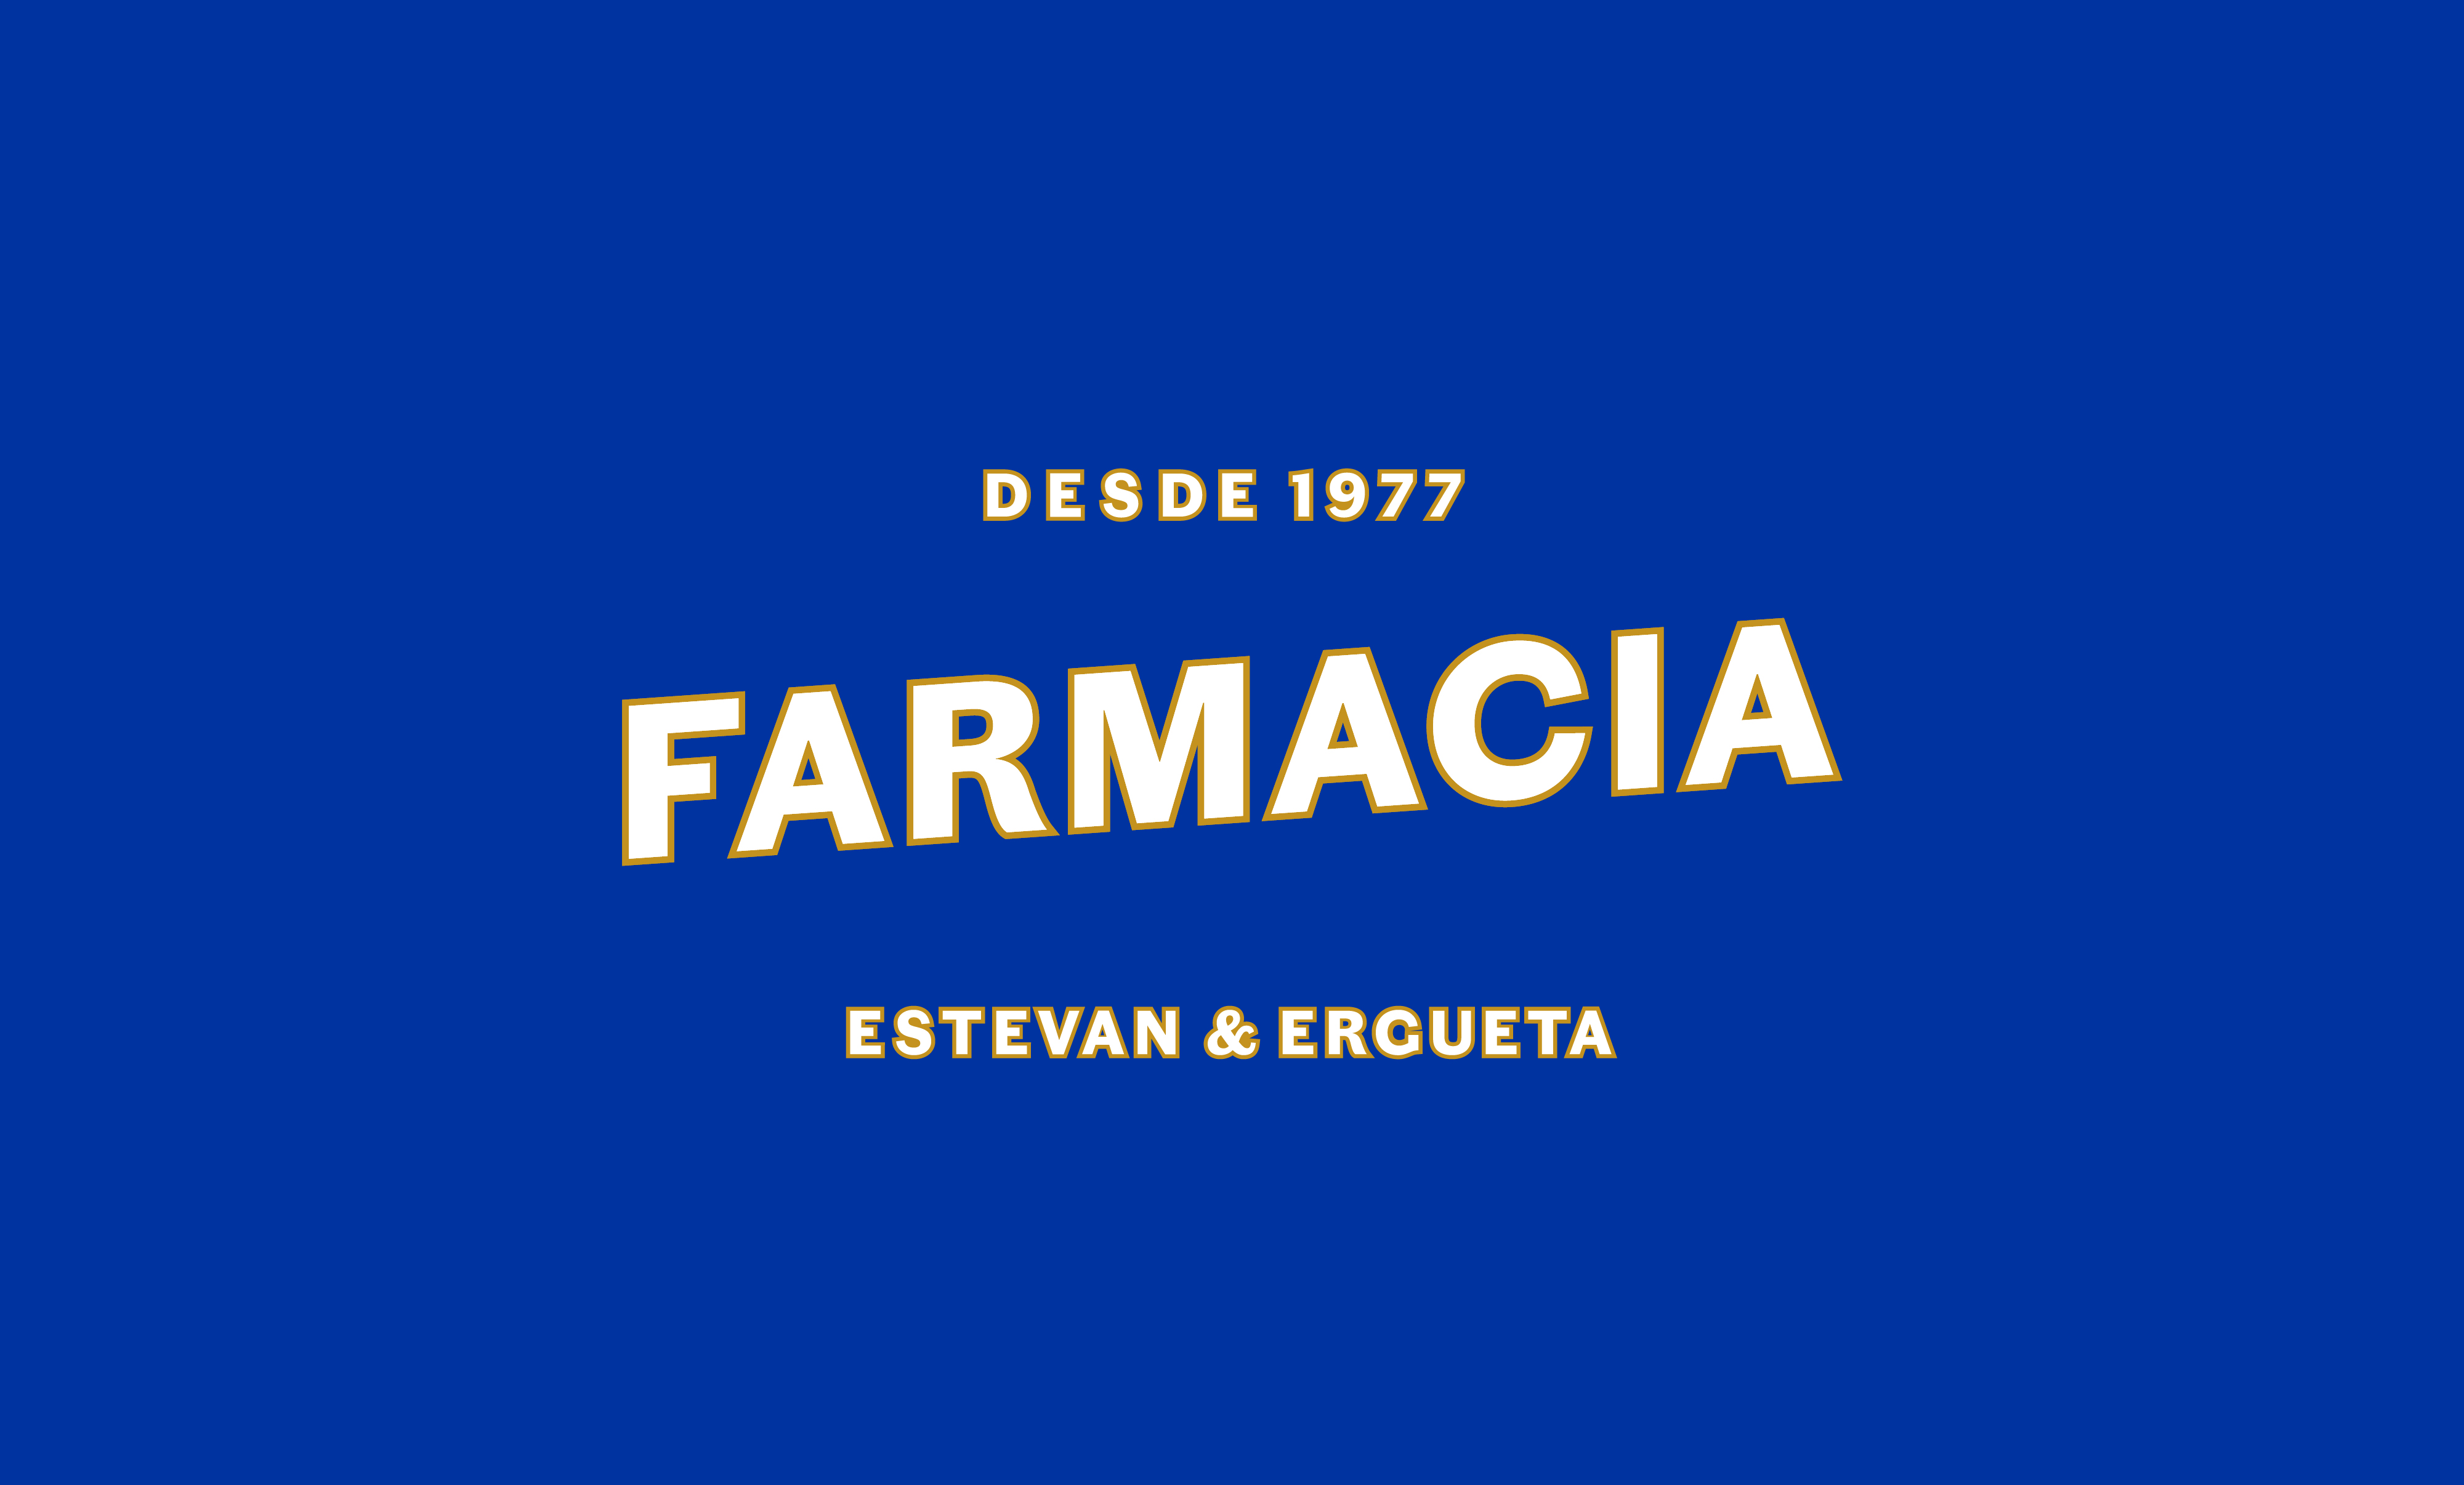 Farmacia Estevan & Ergueta